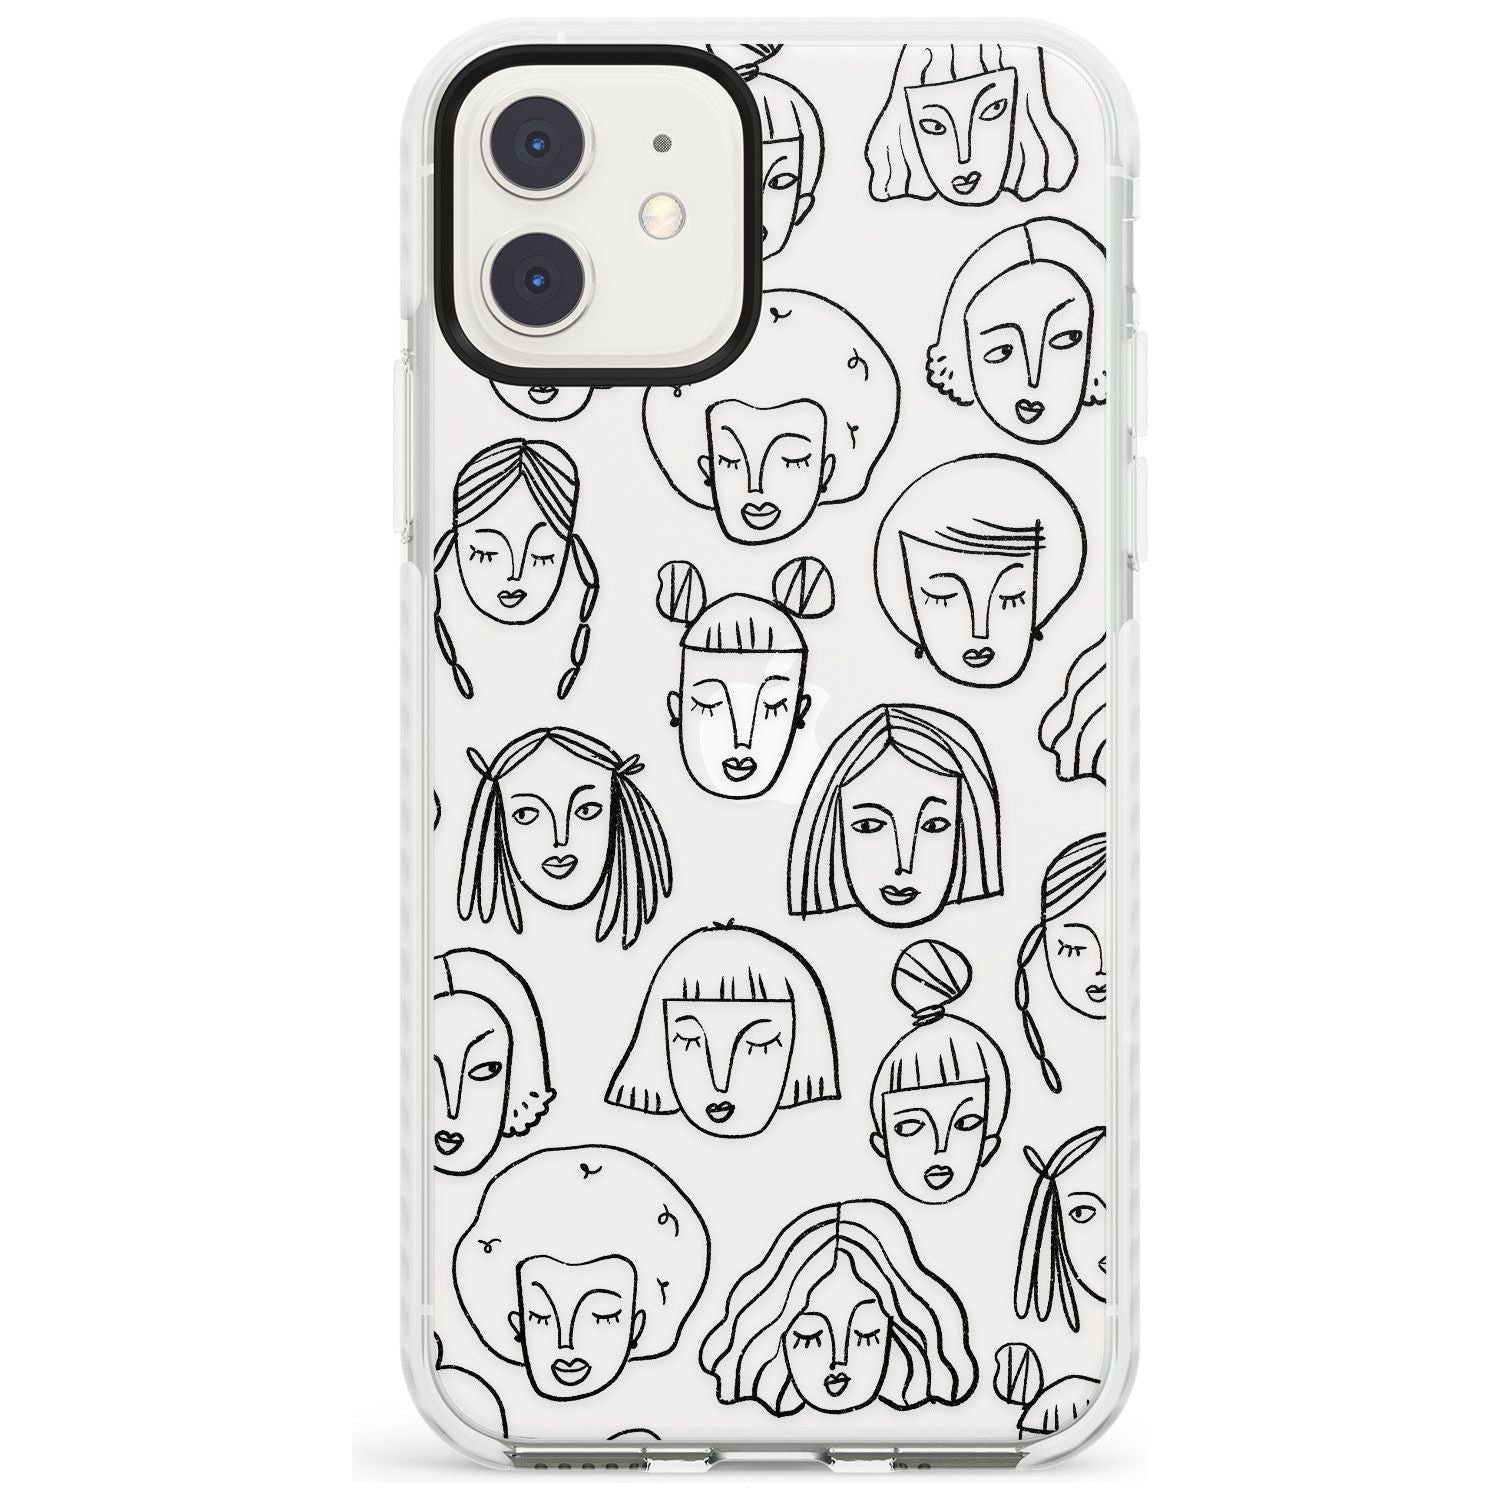 Girl Portrait Doodles Impact Phone Case for iPhone 11